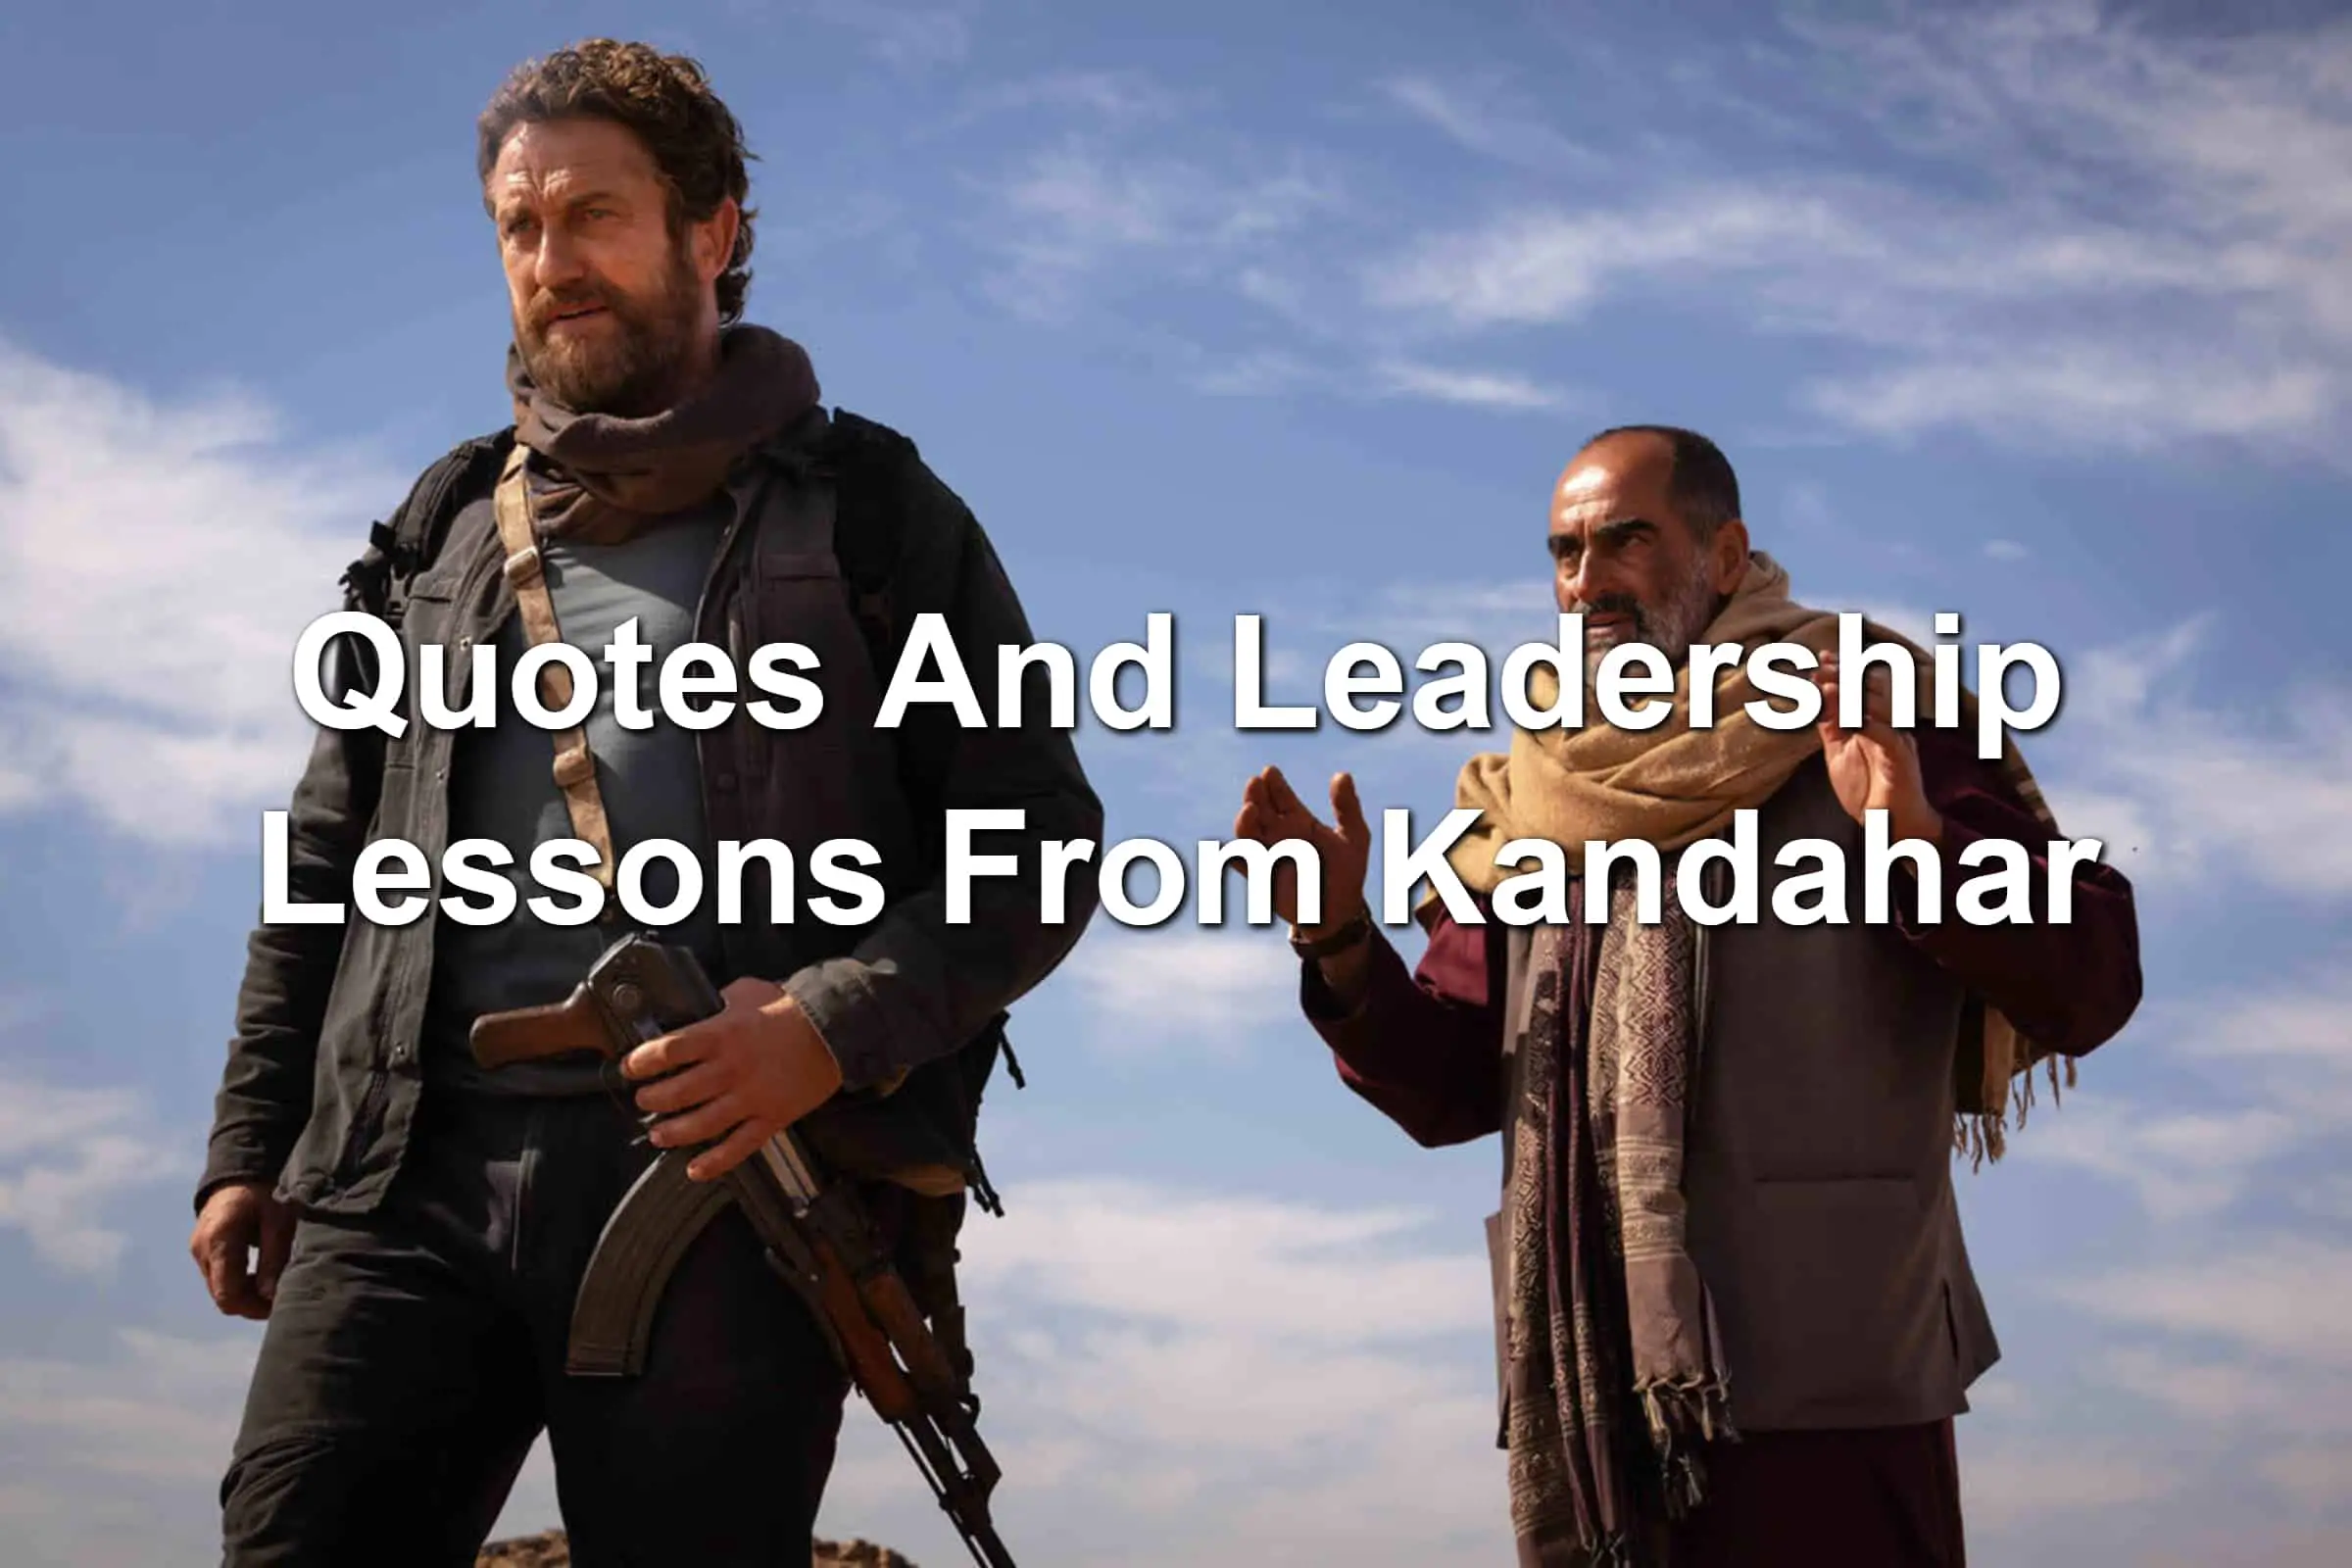 Gerard Butler and Navid Negahban in the movie Kandahar